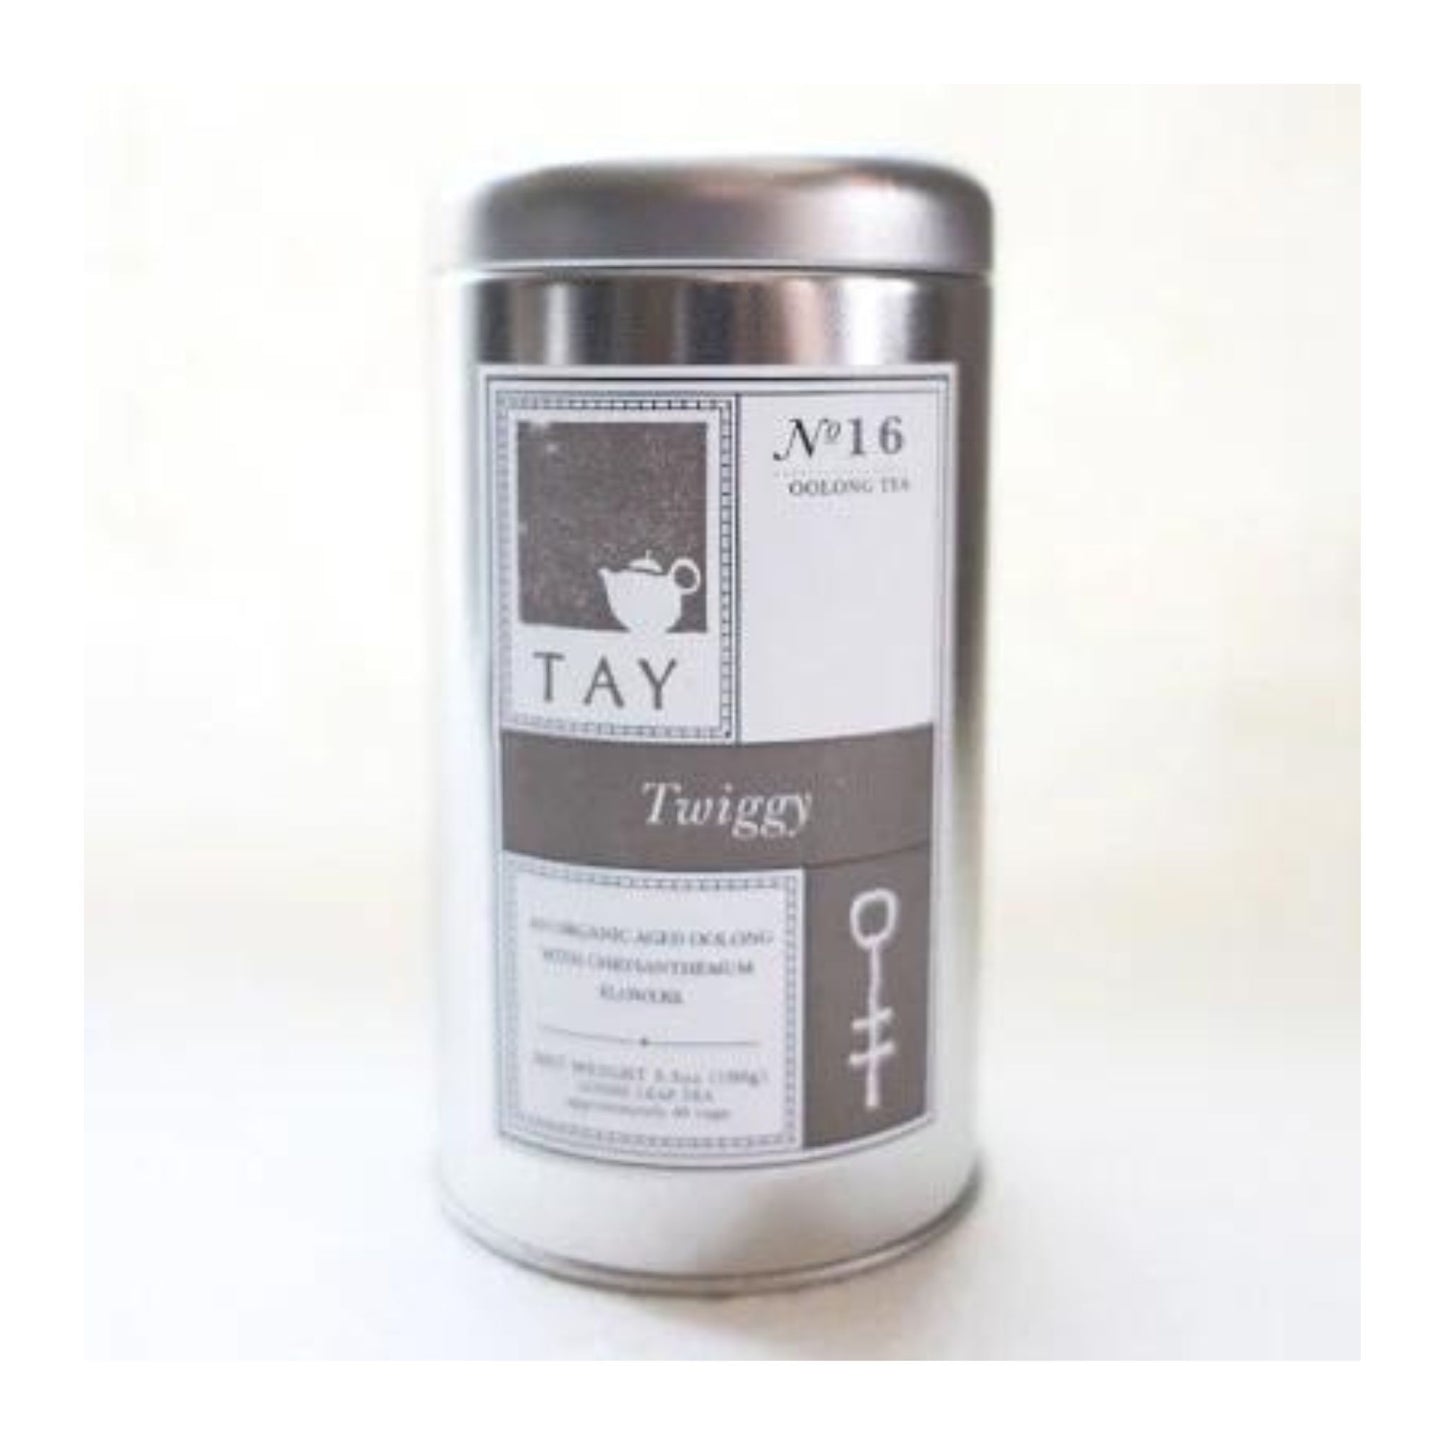 Twiggy Tea from Tay Tea